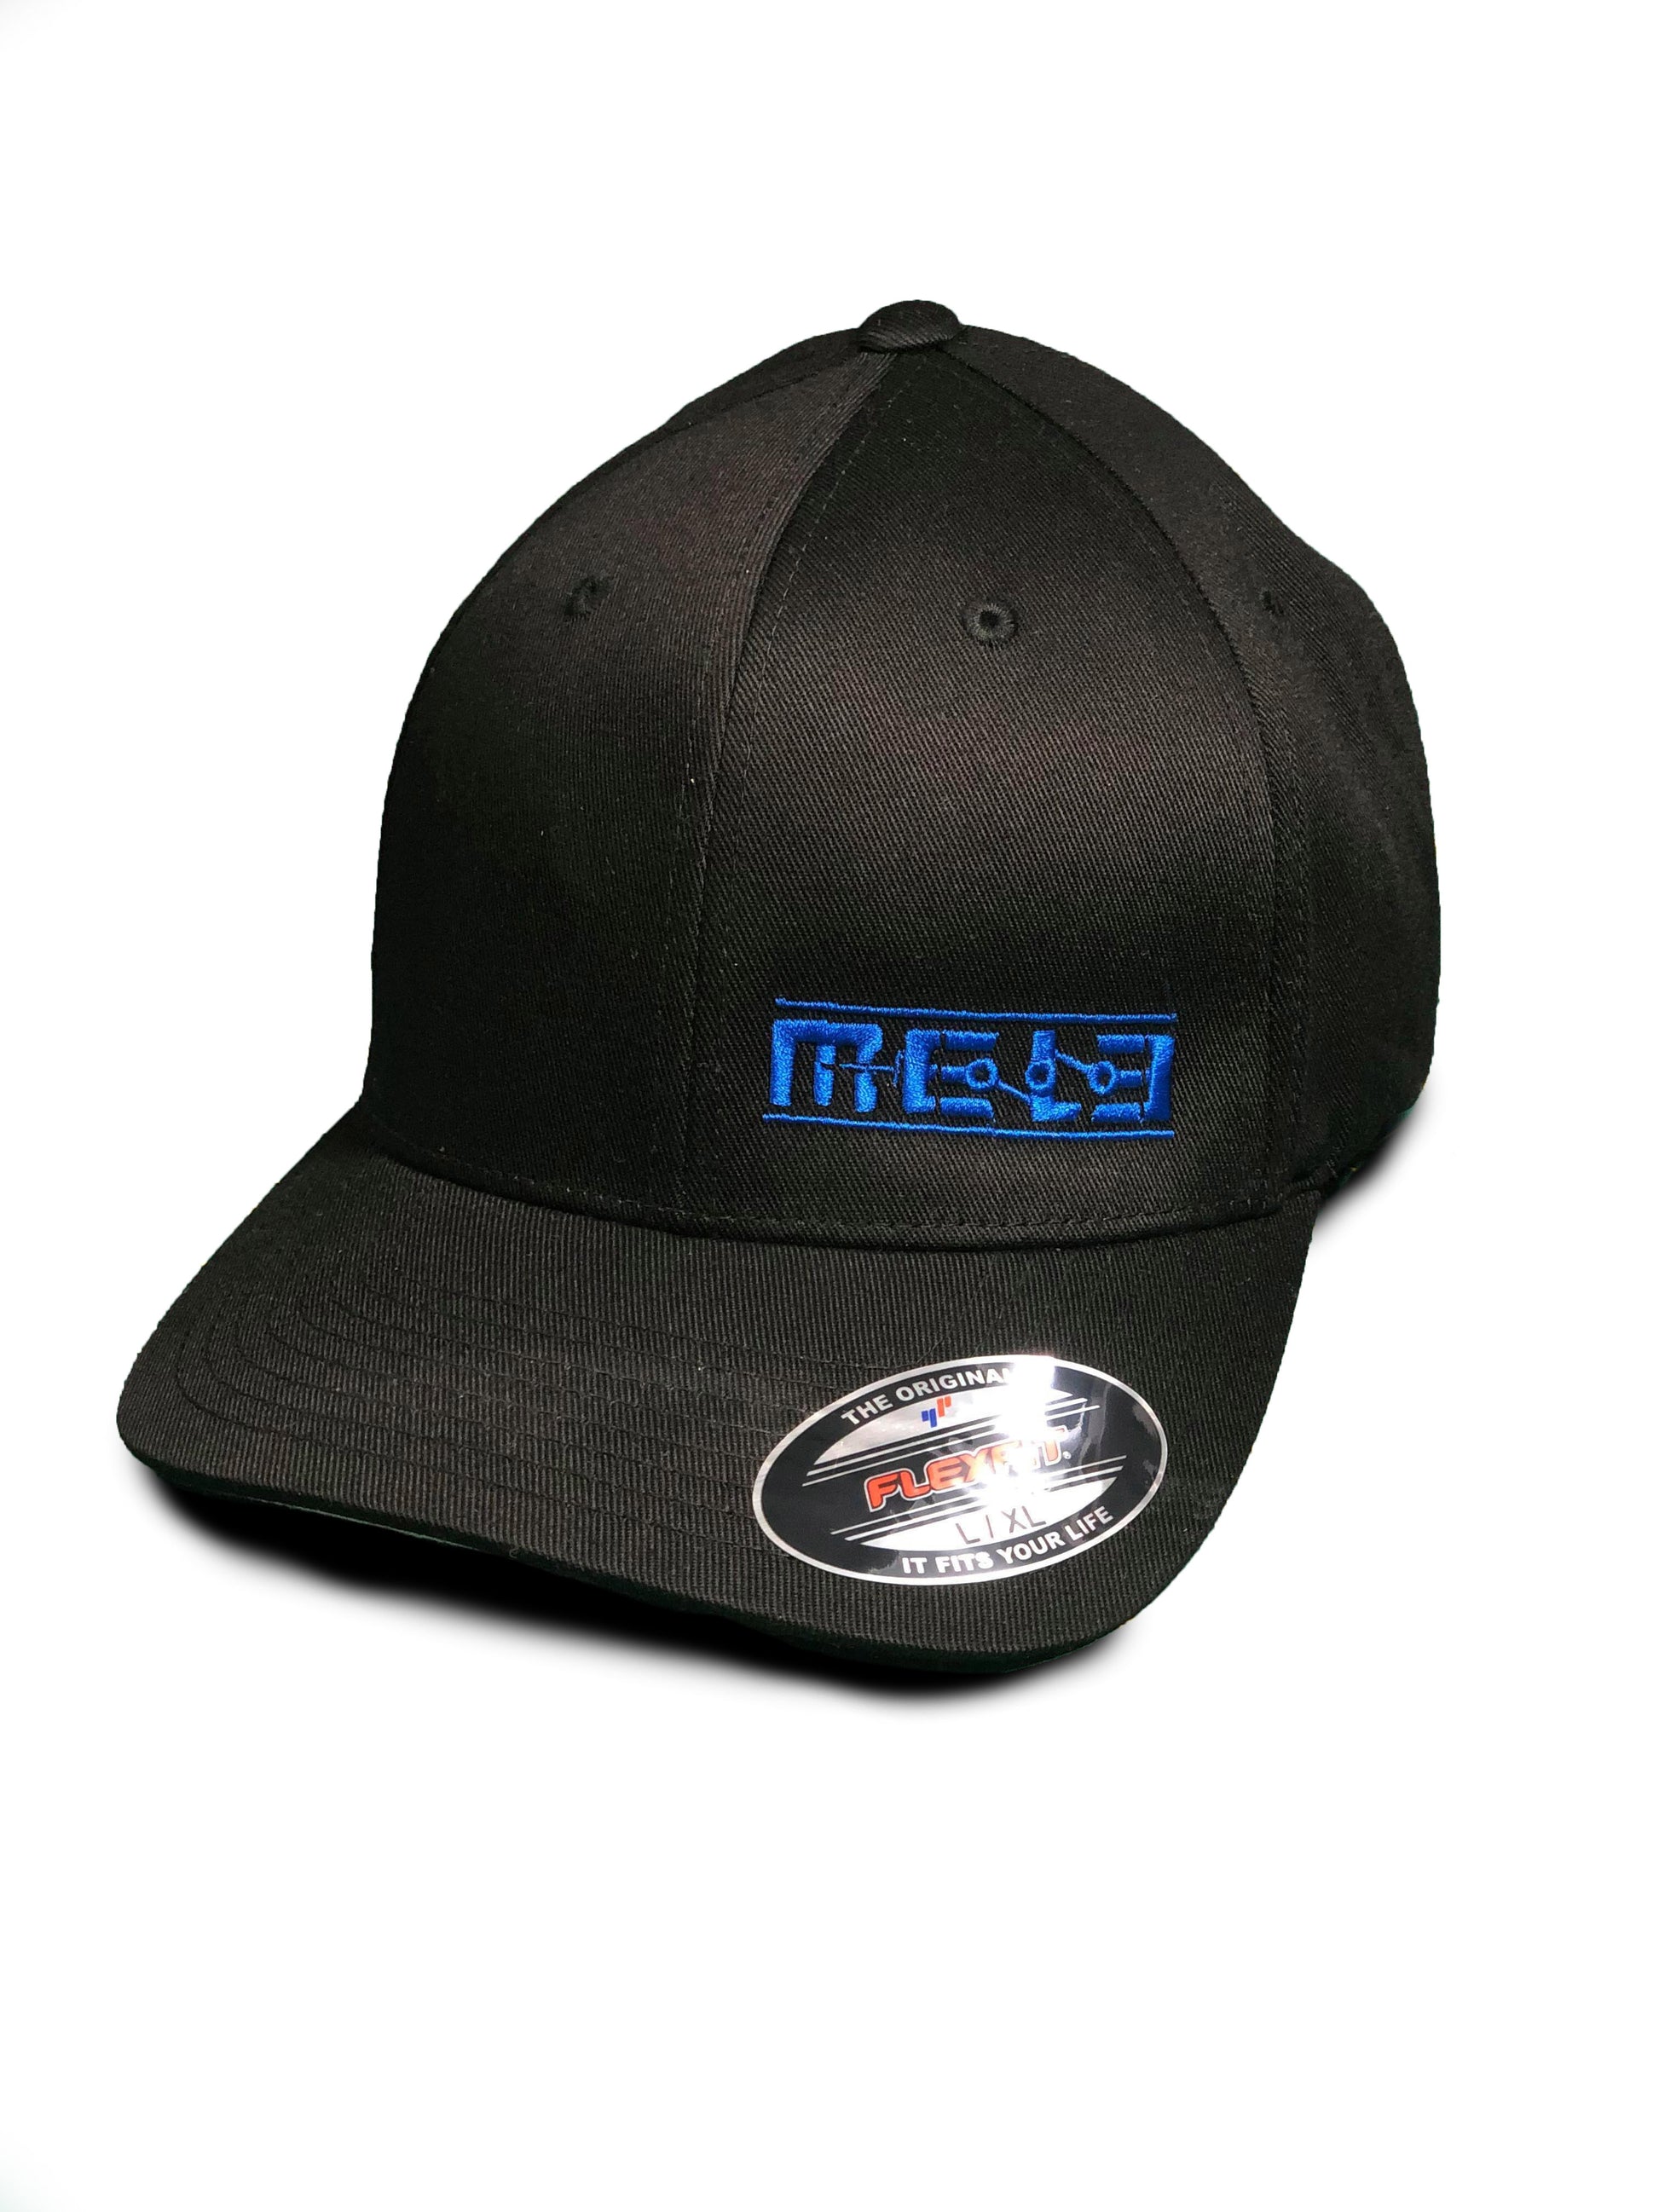 MeLe Flex Fit Hat Blue Mele Design Firm